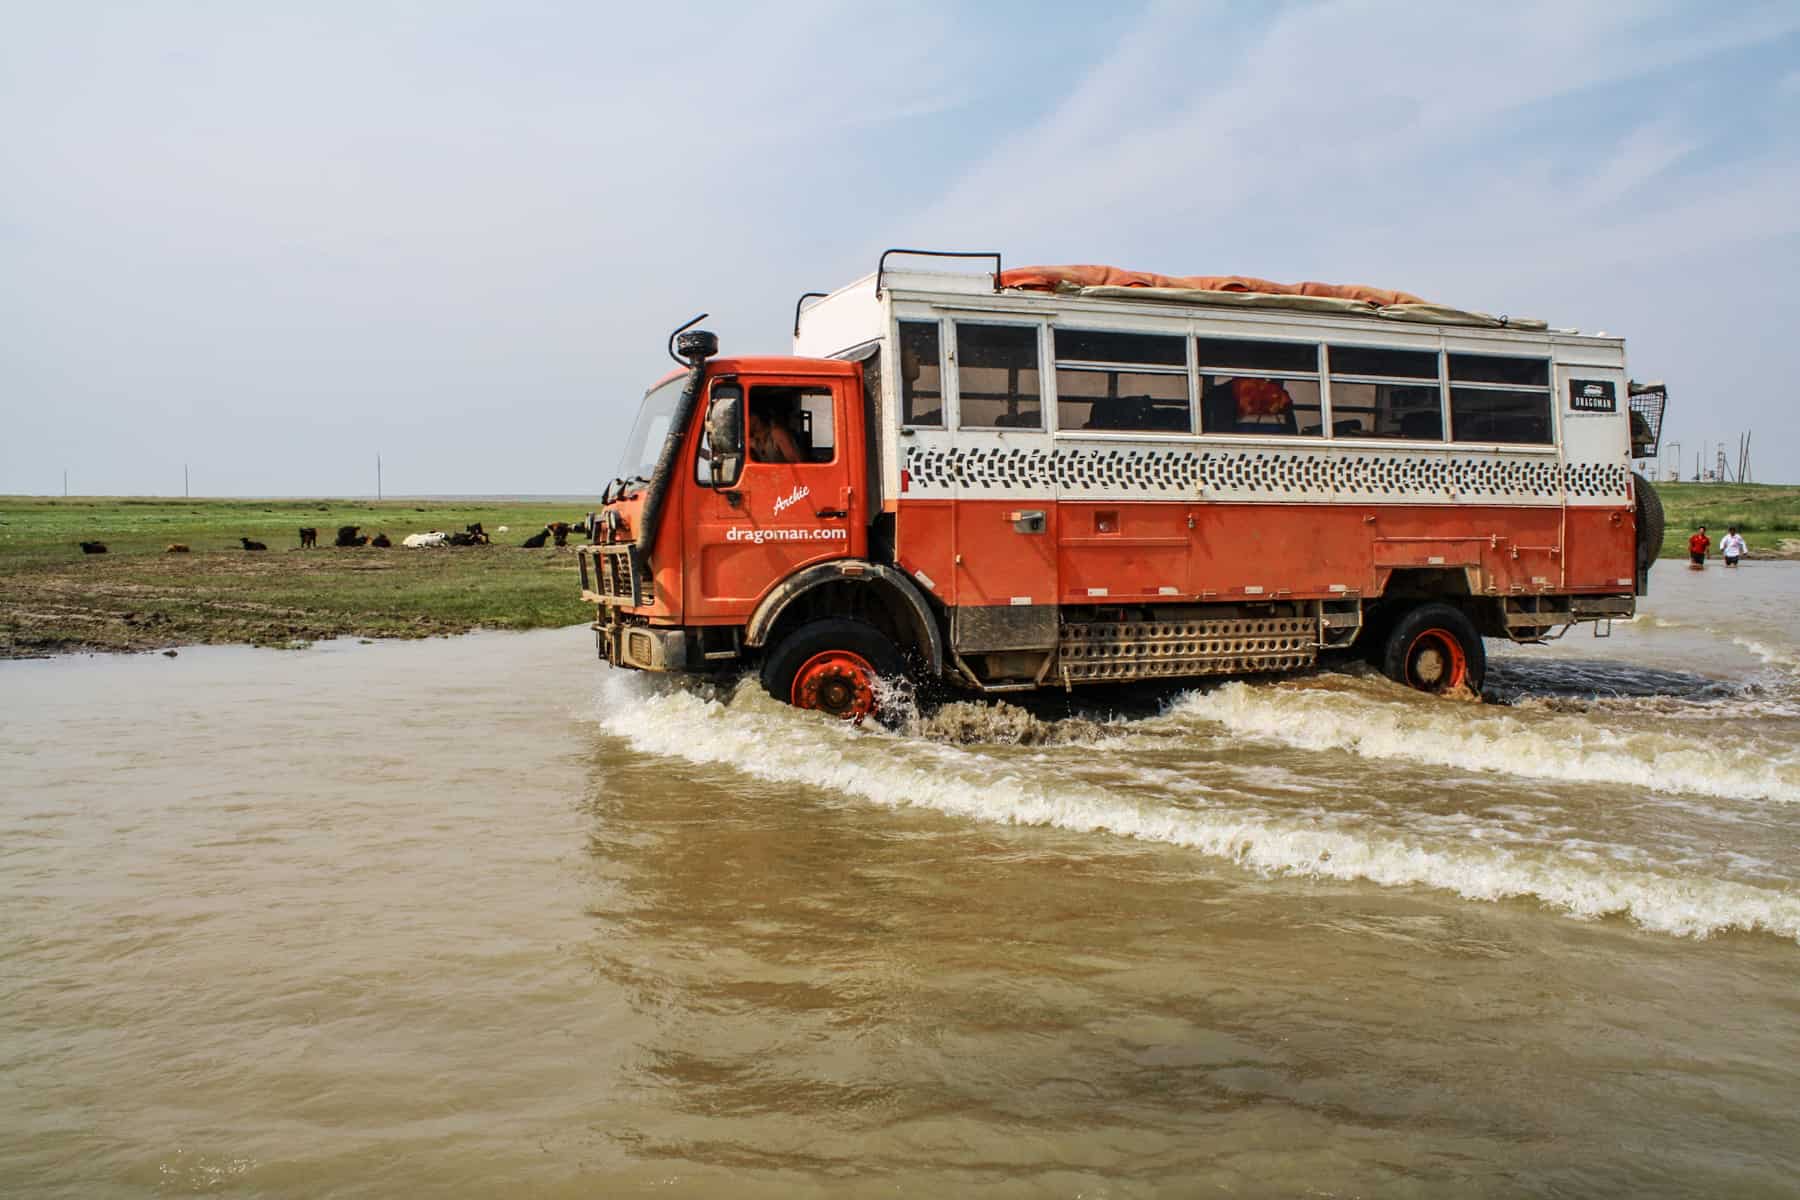 A truck drives through deep water, Overlanding in Mongolia nature